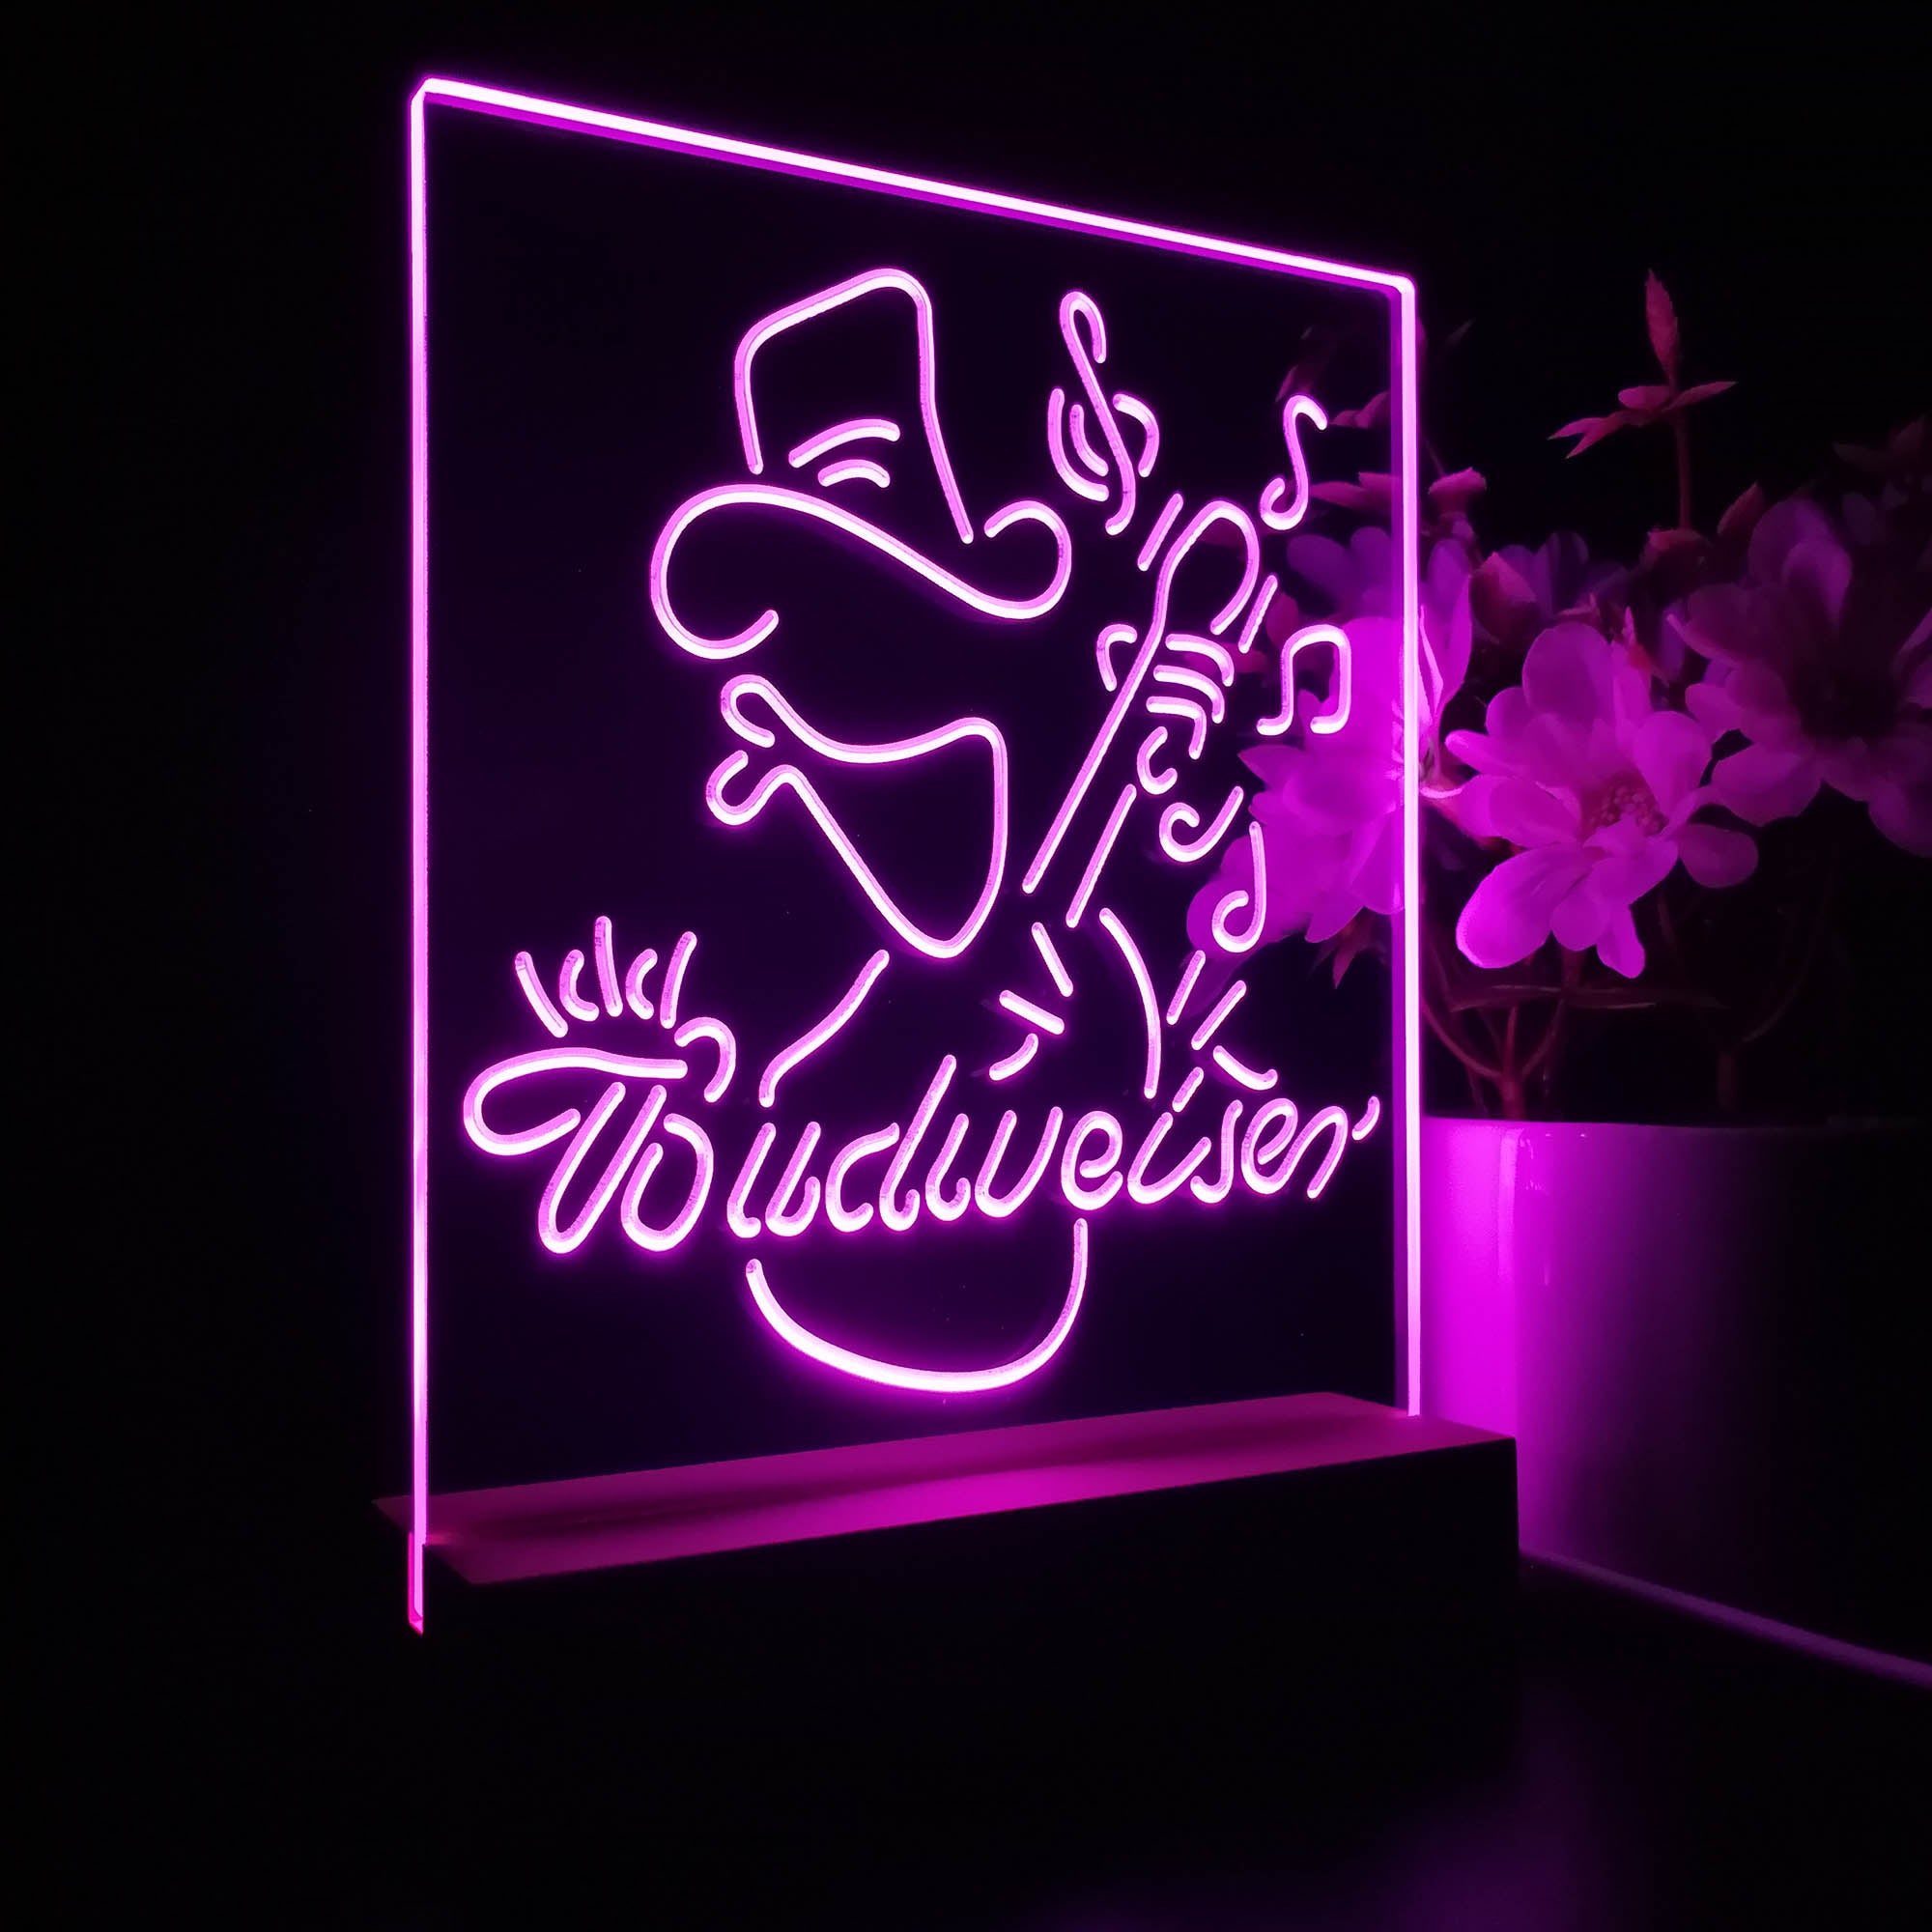 Budweiser Cowboy Play Guitar 3D LED Illusion Night Light Table Lamp